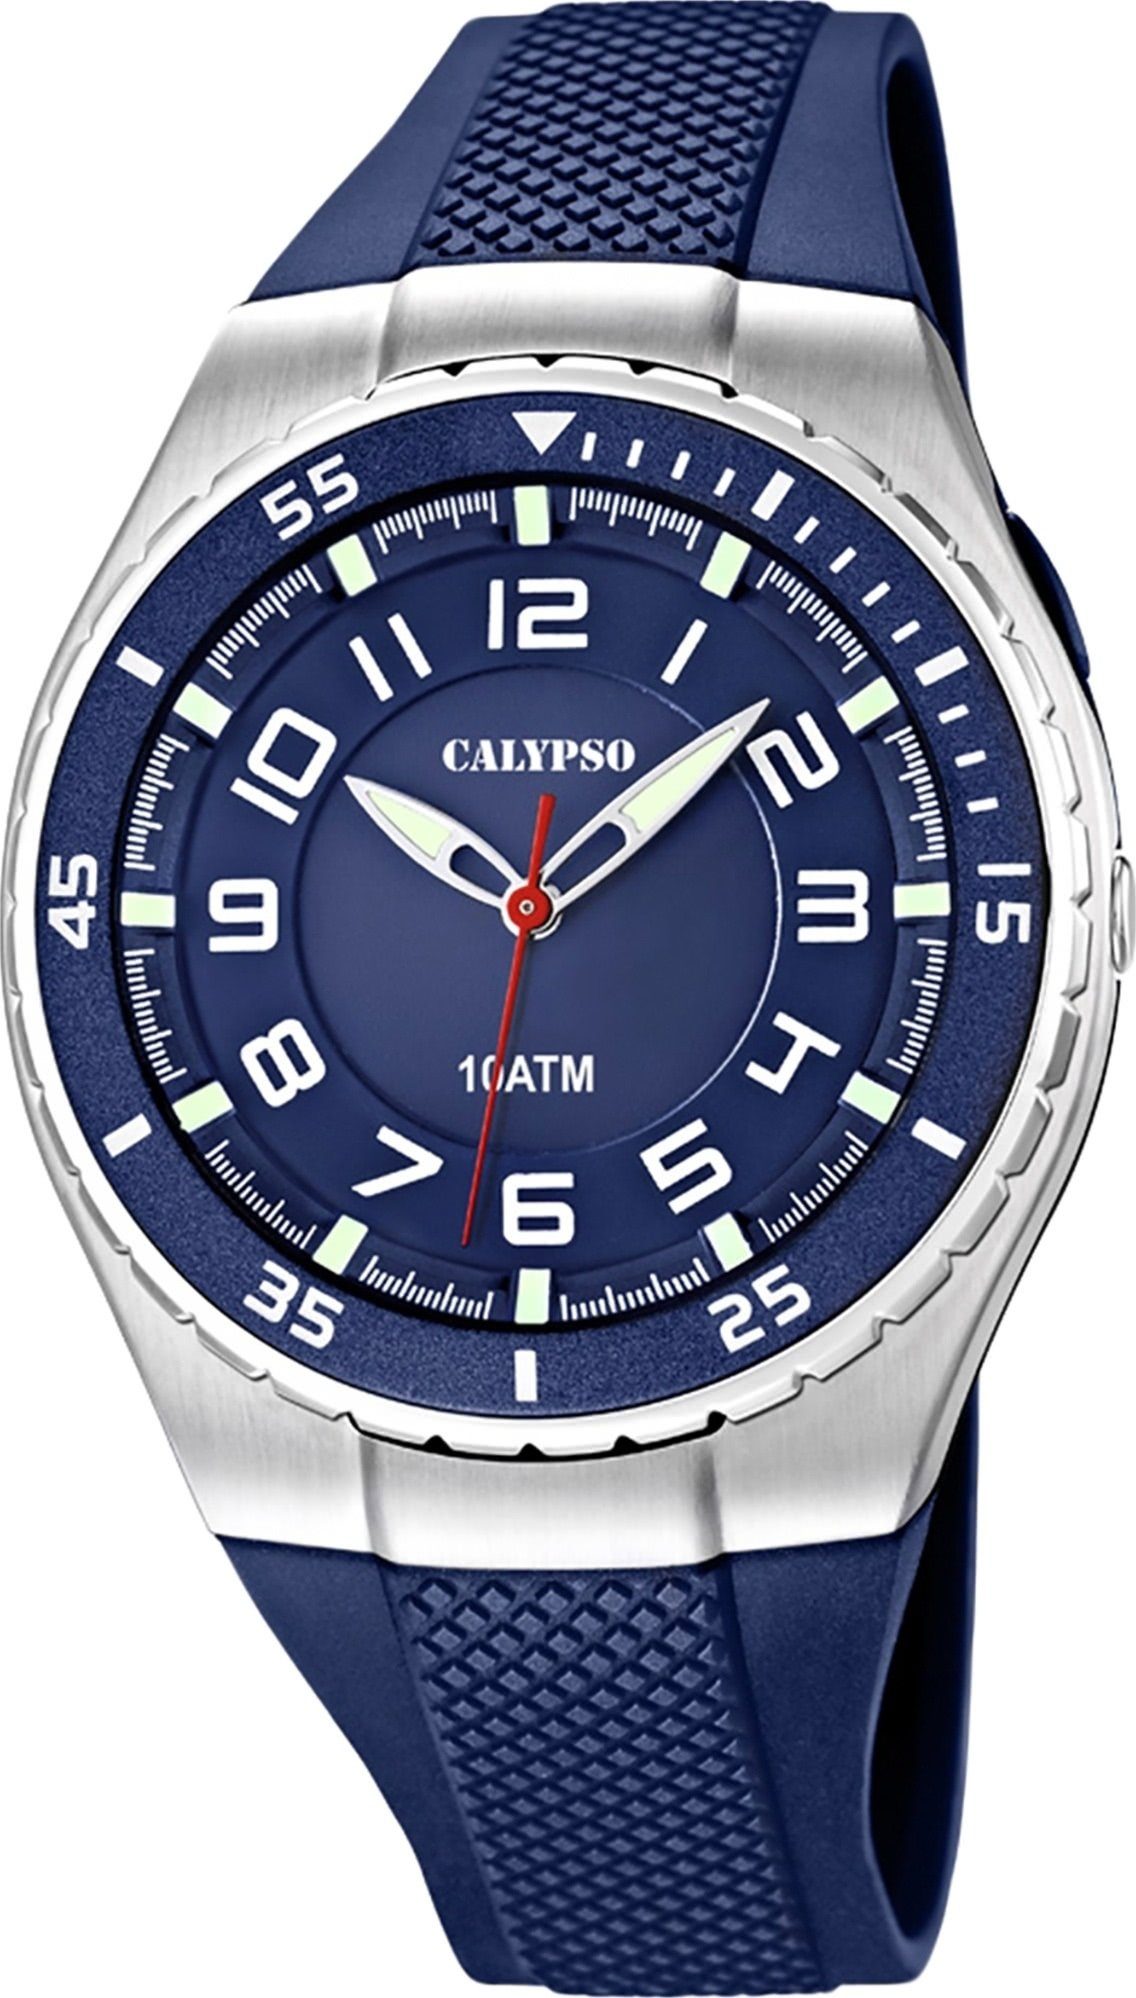 Silikonarmband blau, WATCHES Herren K6063/2 Calypso Casual Armbanduhr Uhr Herren CALYPSO rund, Quarzuhr Silikon, Casual